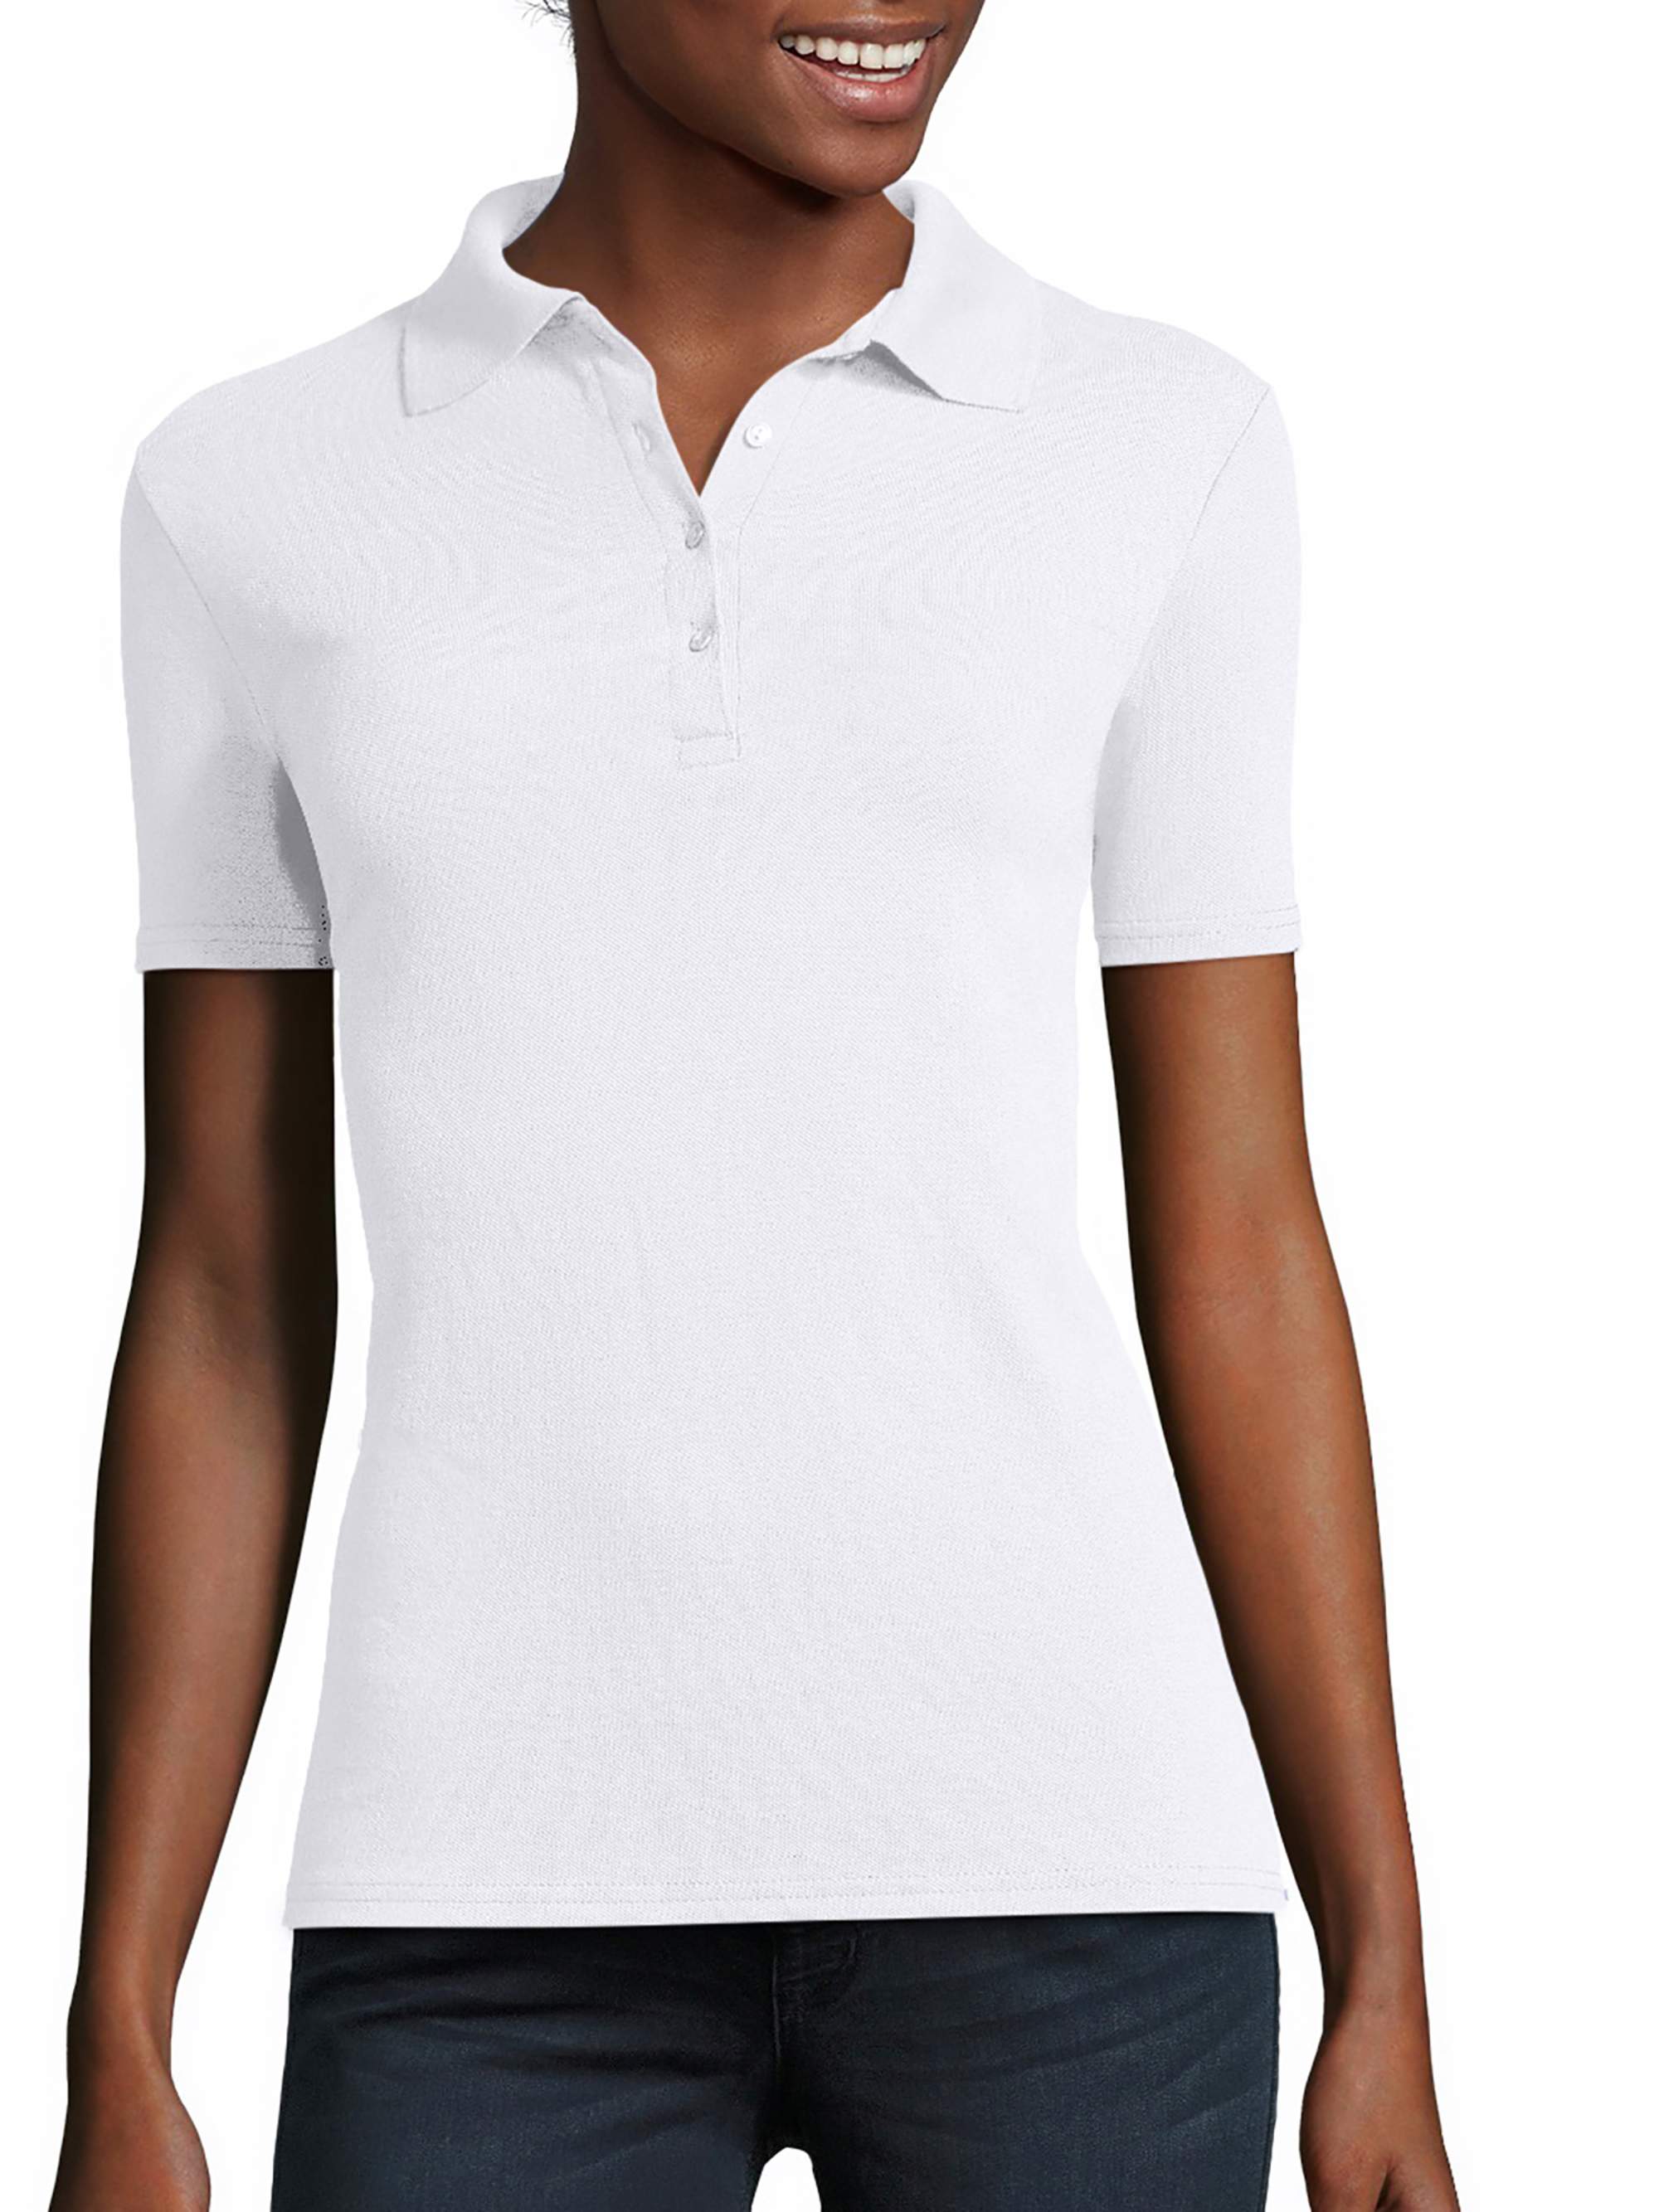 Hanes Women's X-Temp w/ Fresh IQ Short Sleeve Pique Polo Shirt - image 1 of 6